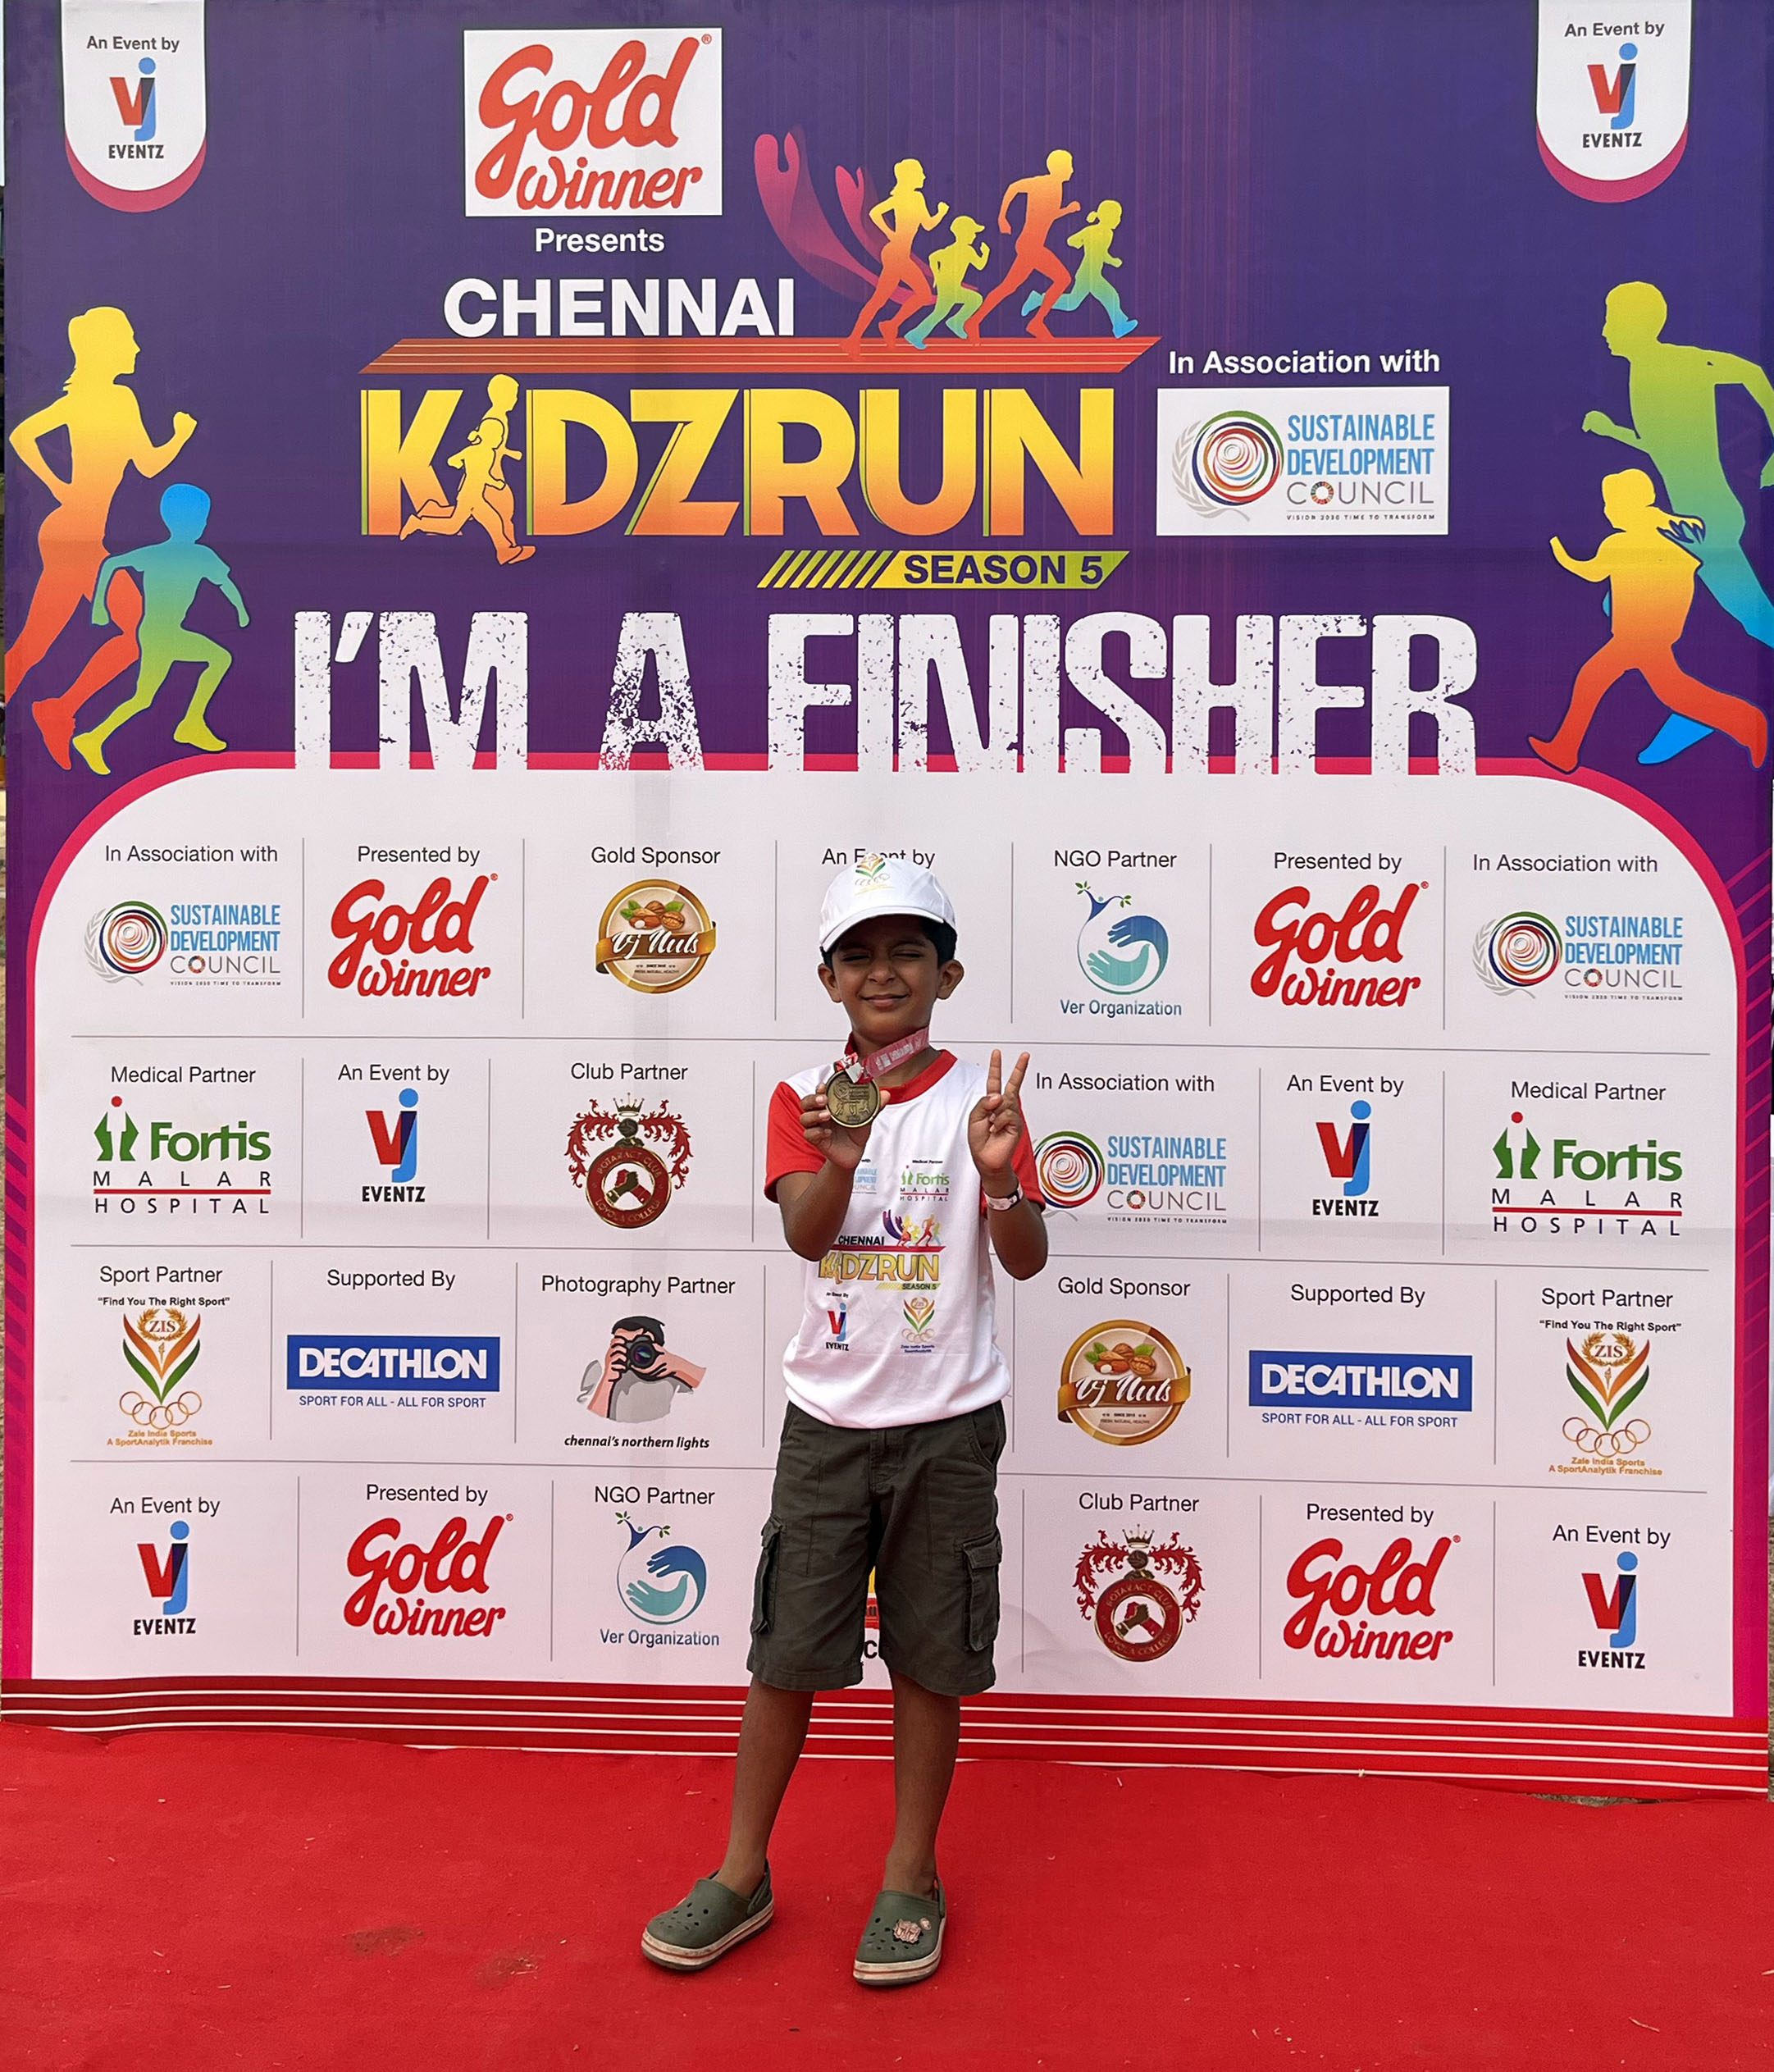 Chennai KidzRun-2022